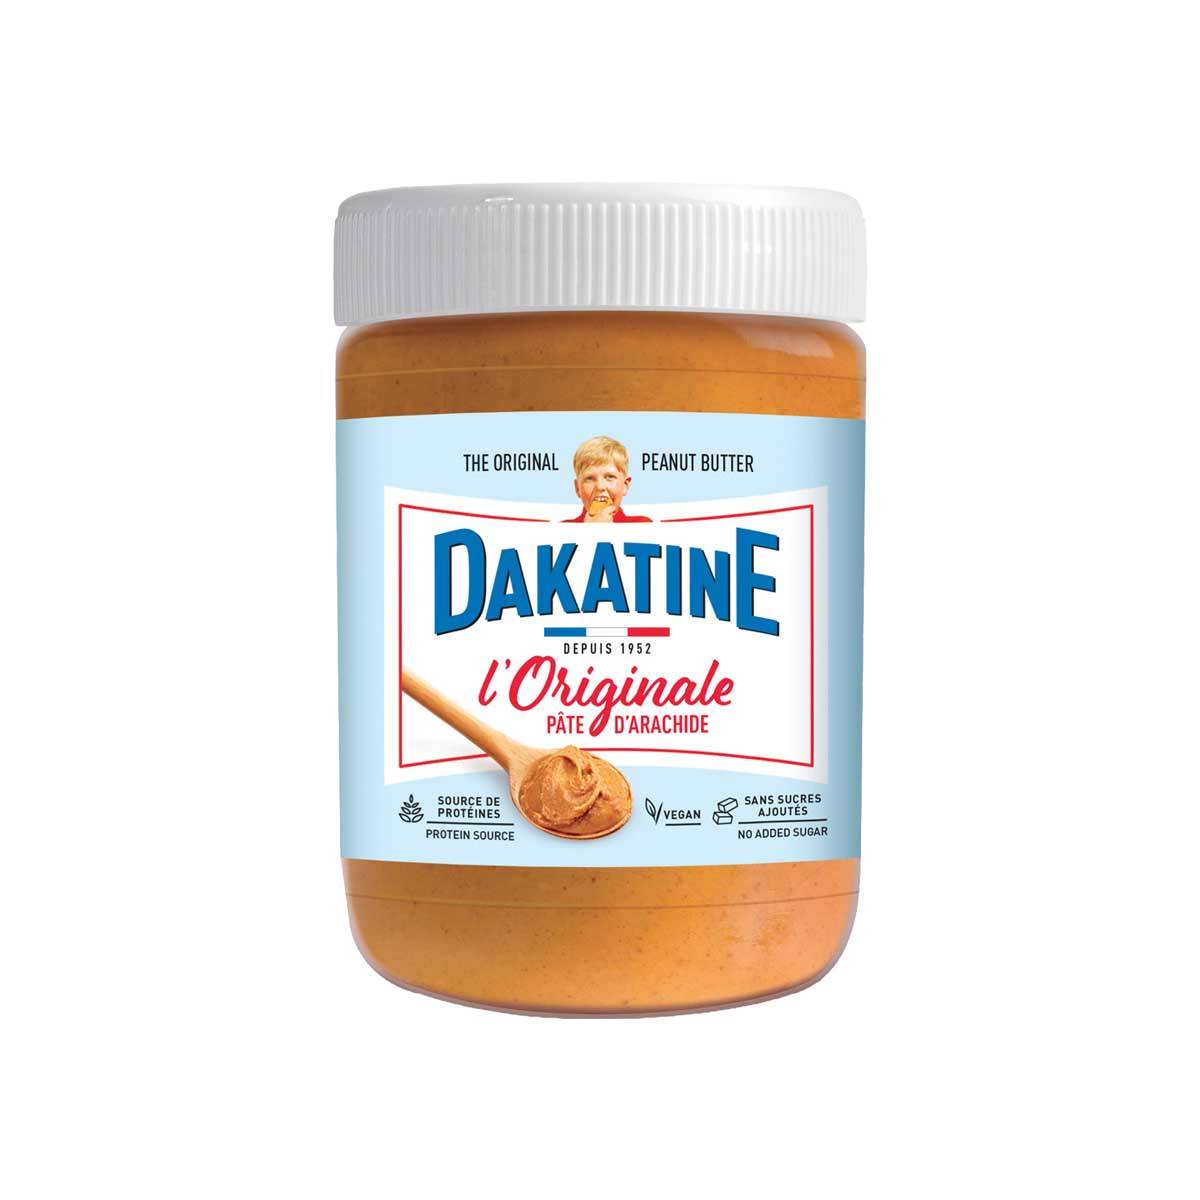 Dakatine pâte d’arachide – Erdnusspaste – peanut butter – crema di arachidi – 500g